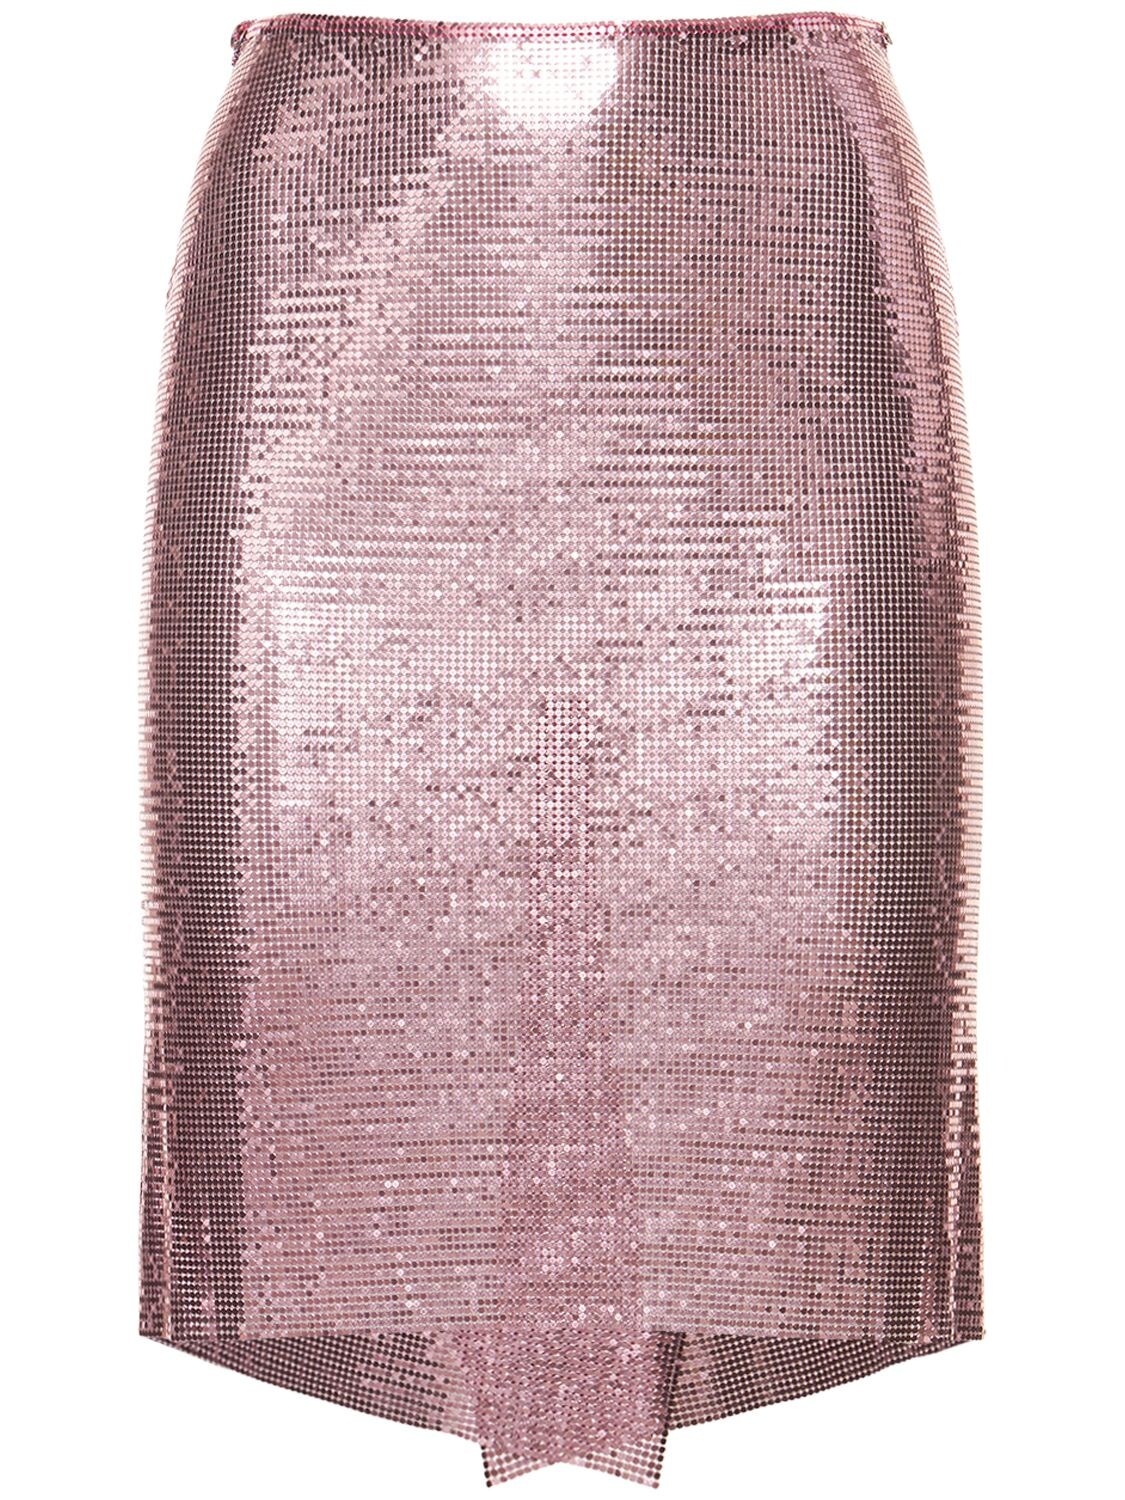 Lvr Exclsuive Sparkle Mini Skirt